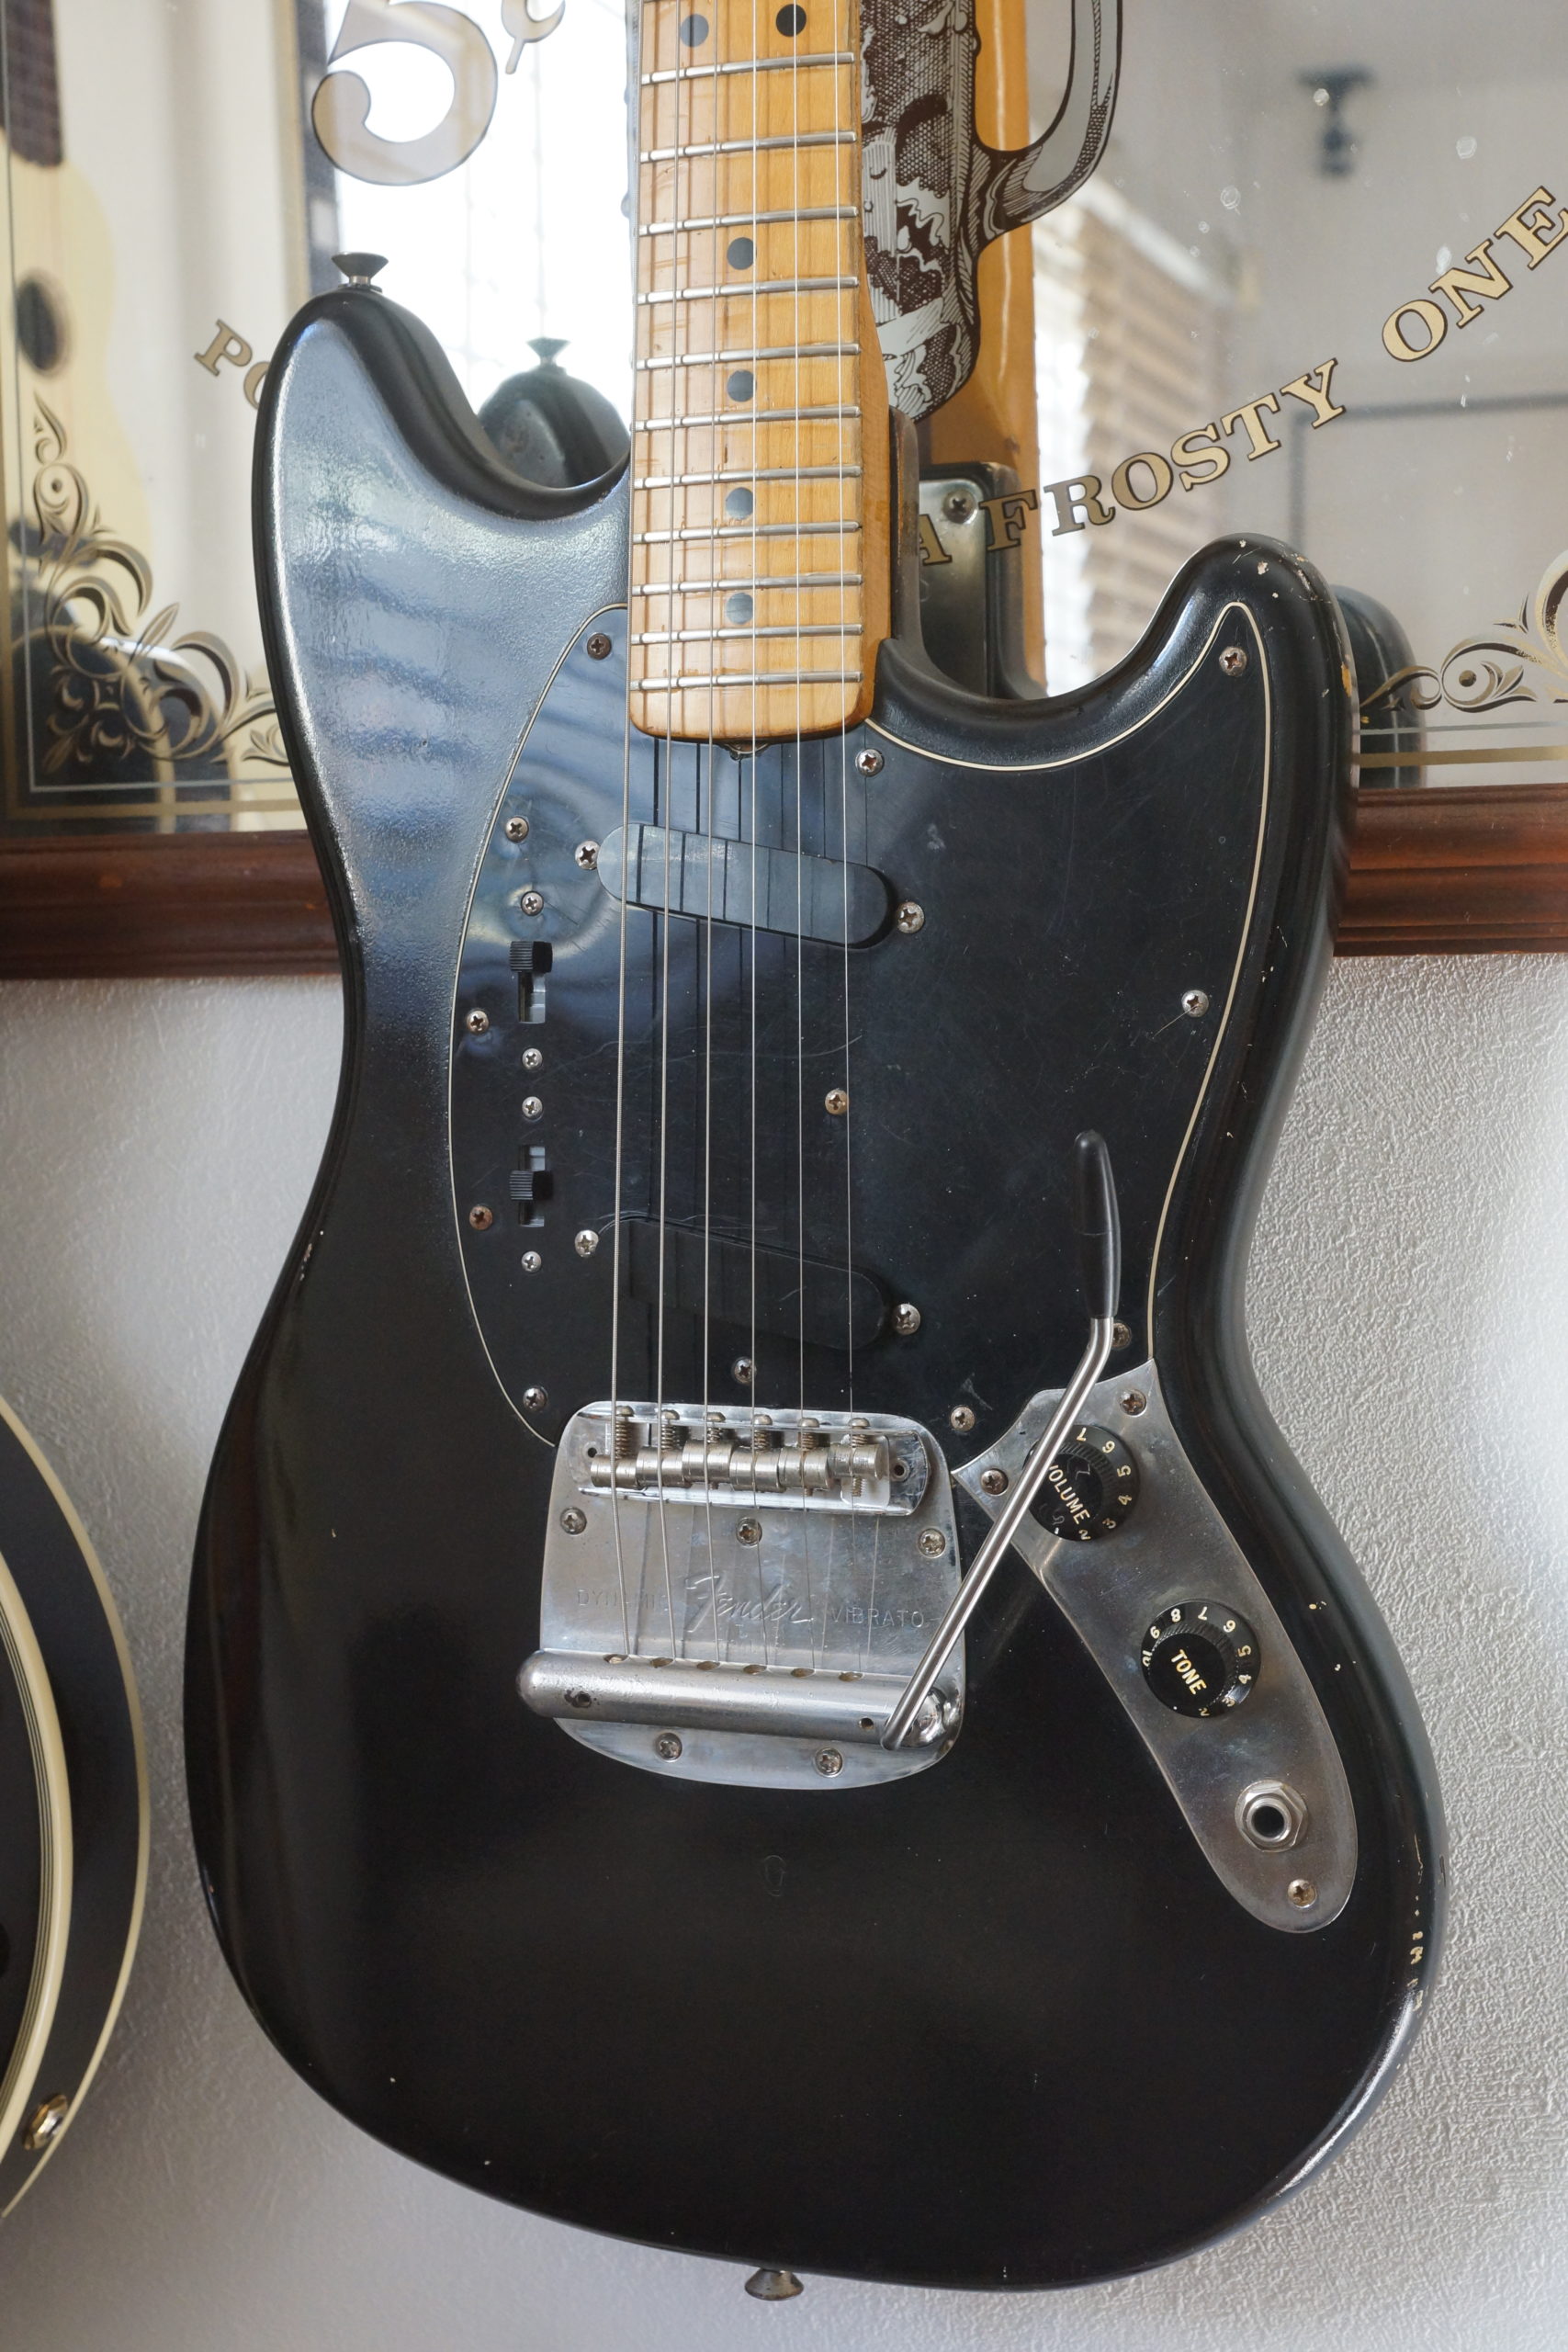 Fender Mustang 1977 '70s USA ムスタング 70年代 Black 配線図 wiring 配線 1966 Vintage ピックガード交換 ペグ交換 dilectronダイレクトロン